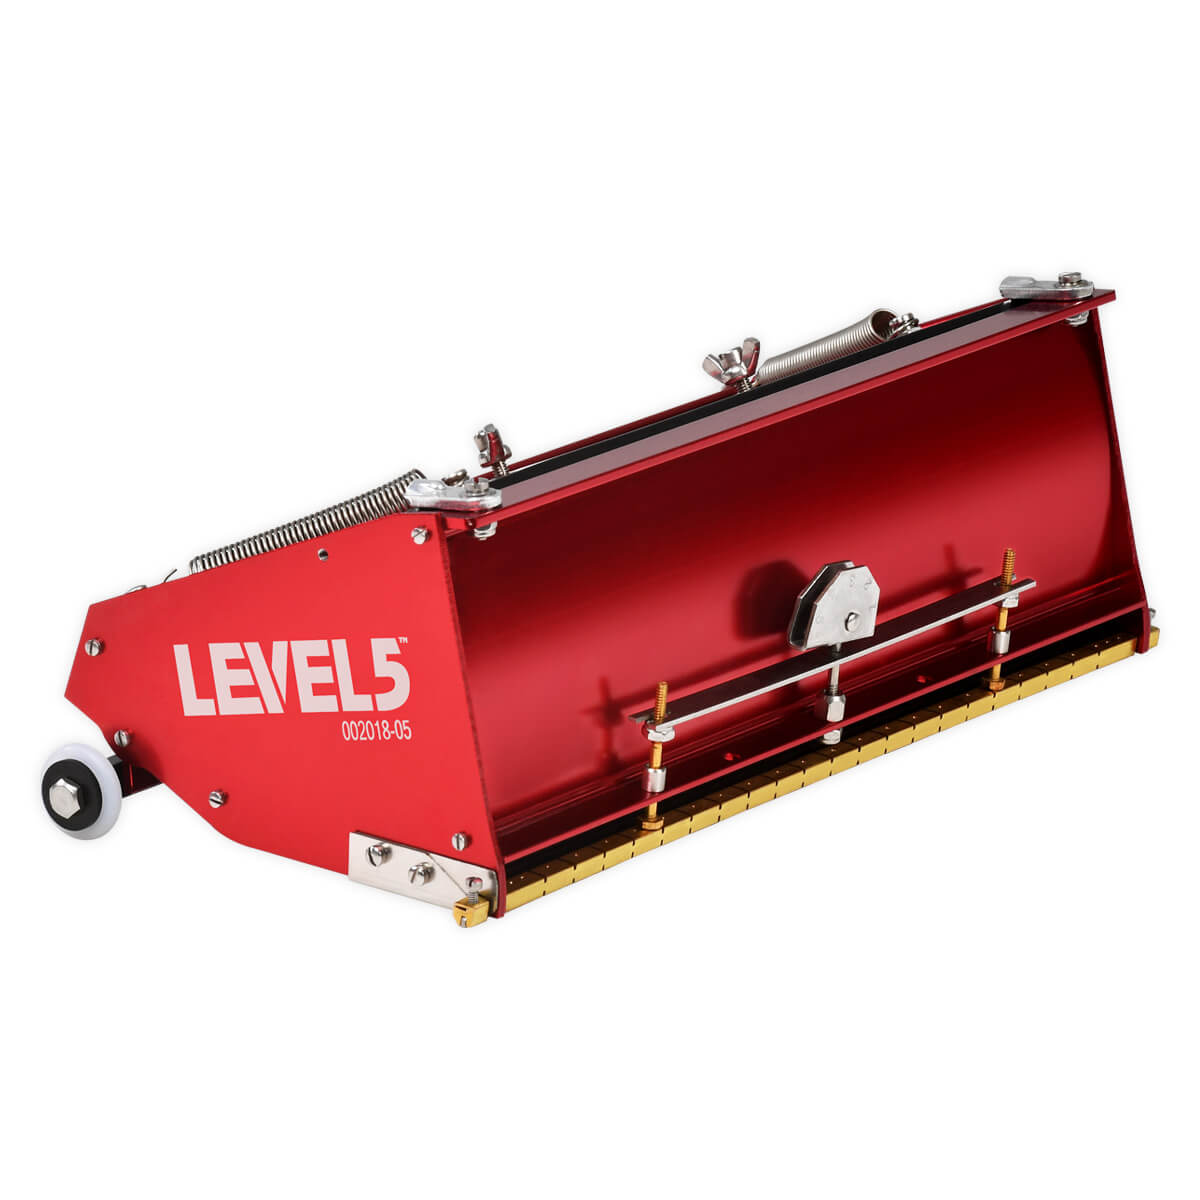 Level 5 "Big Red" Set